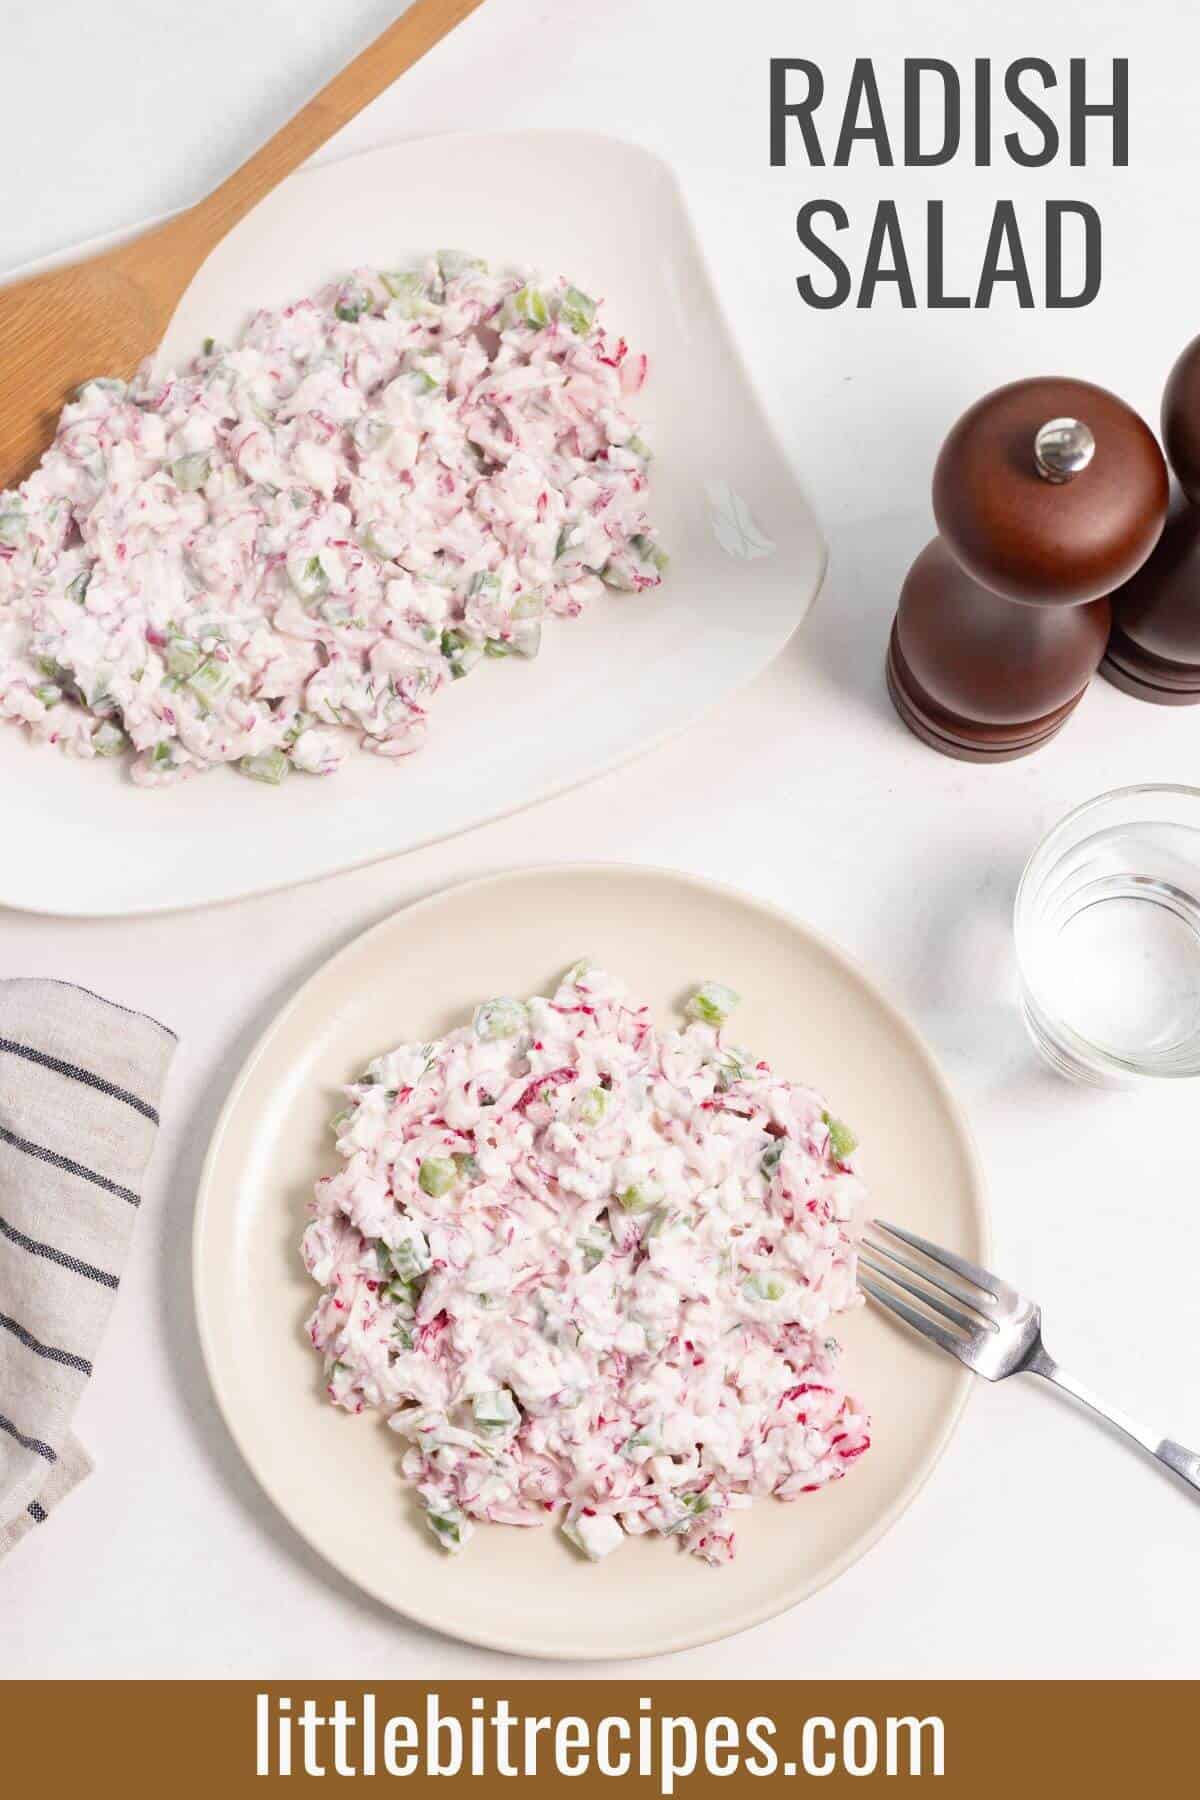 radish salad with text.